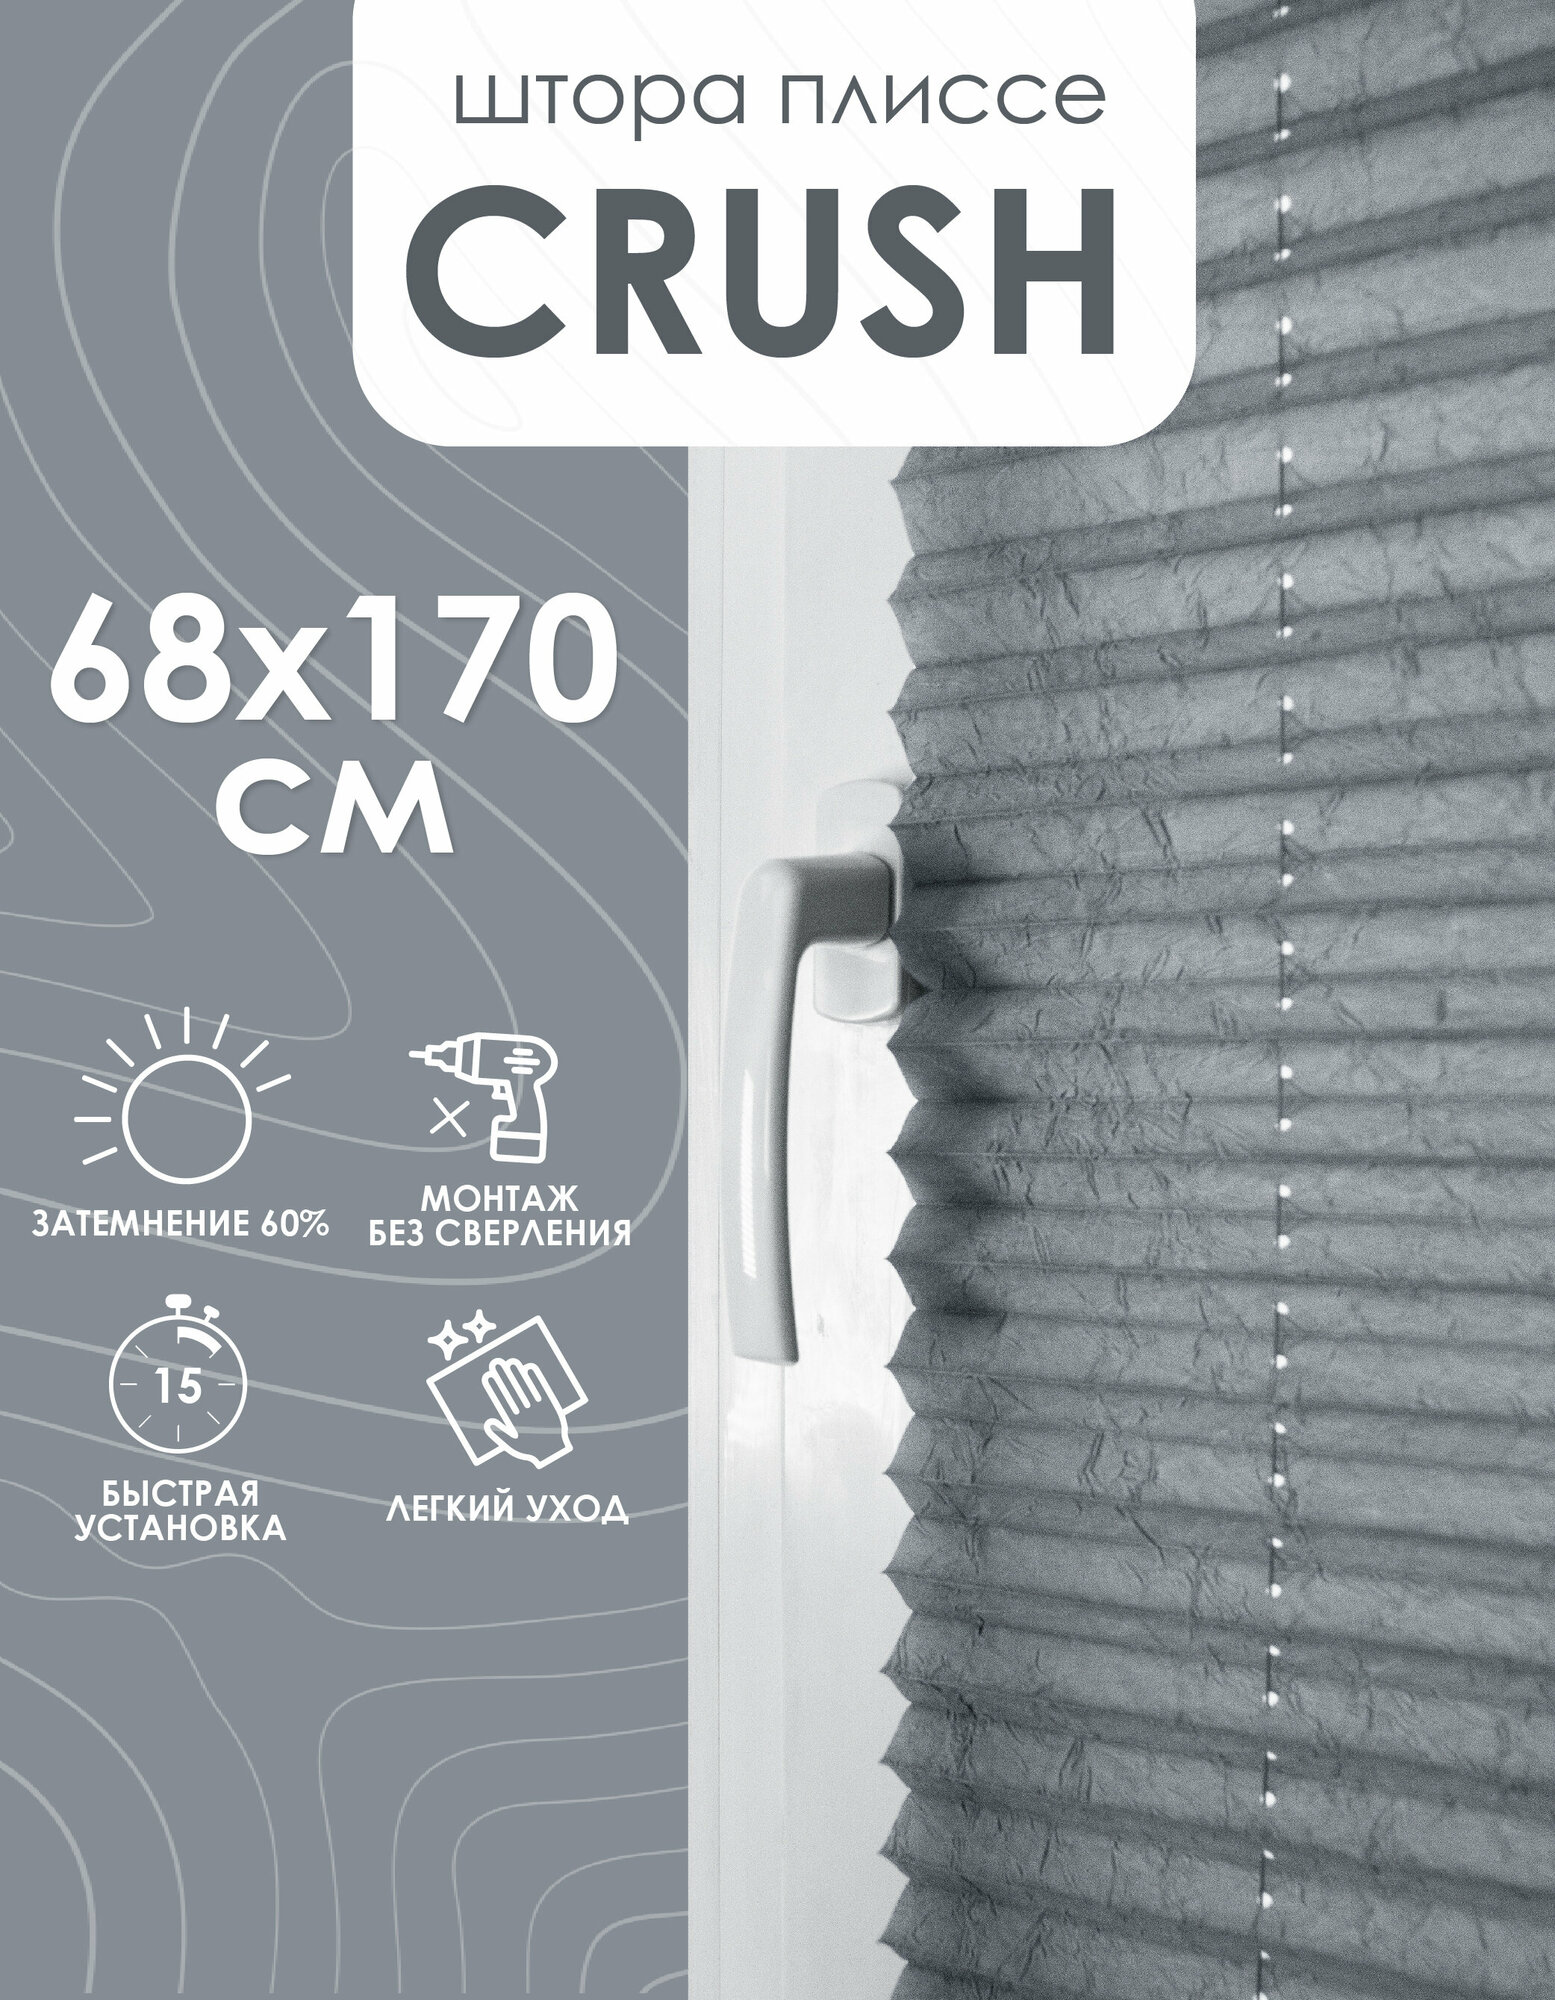 Плиссе натяжного типа "Crush", серый, 68х170 см, арт. 140801068